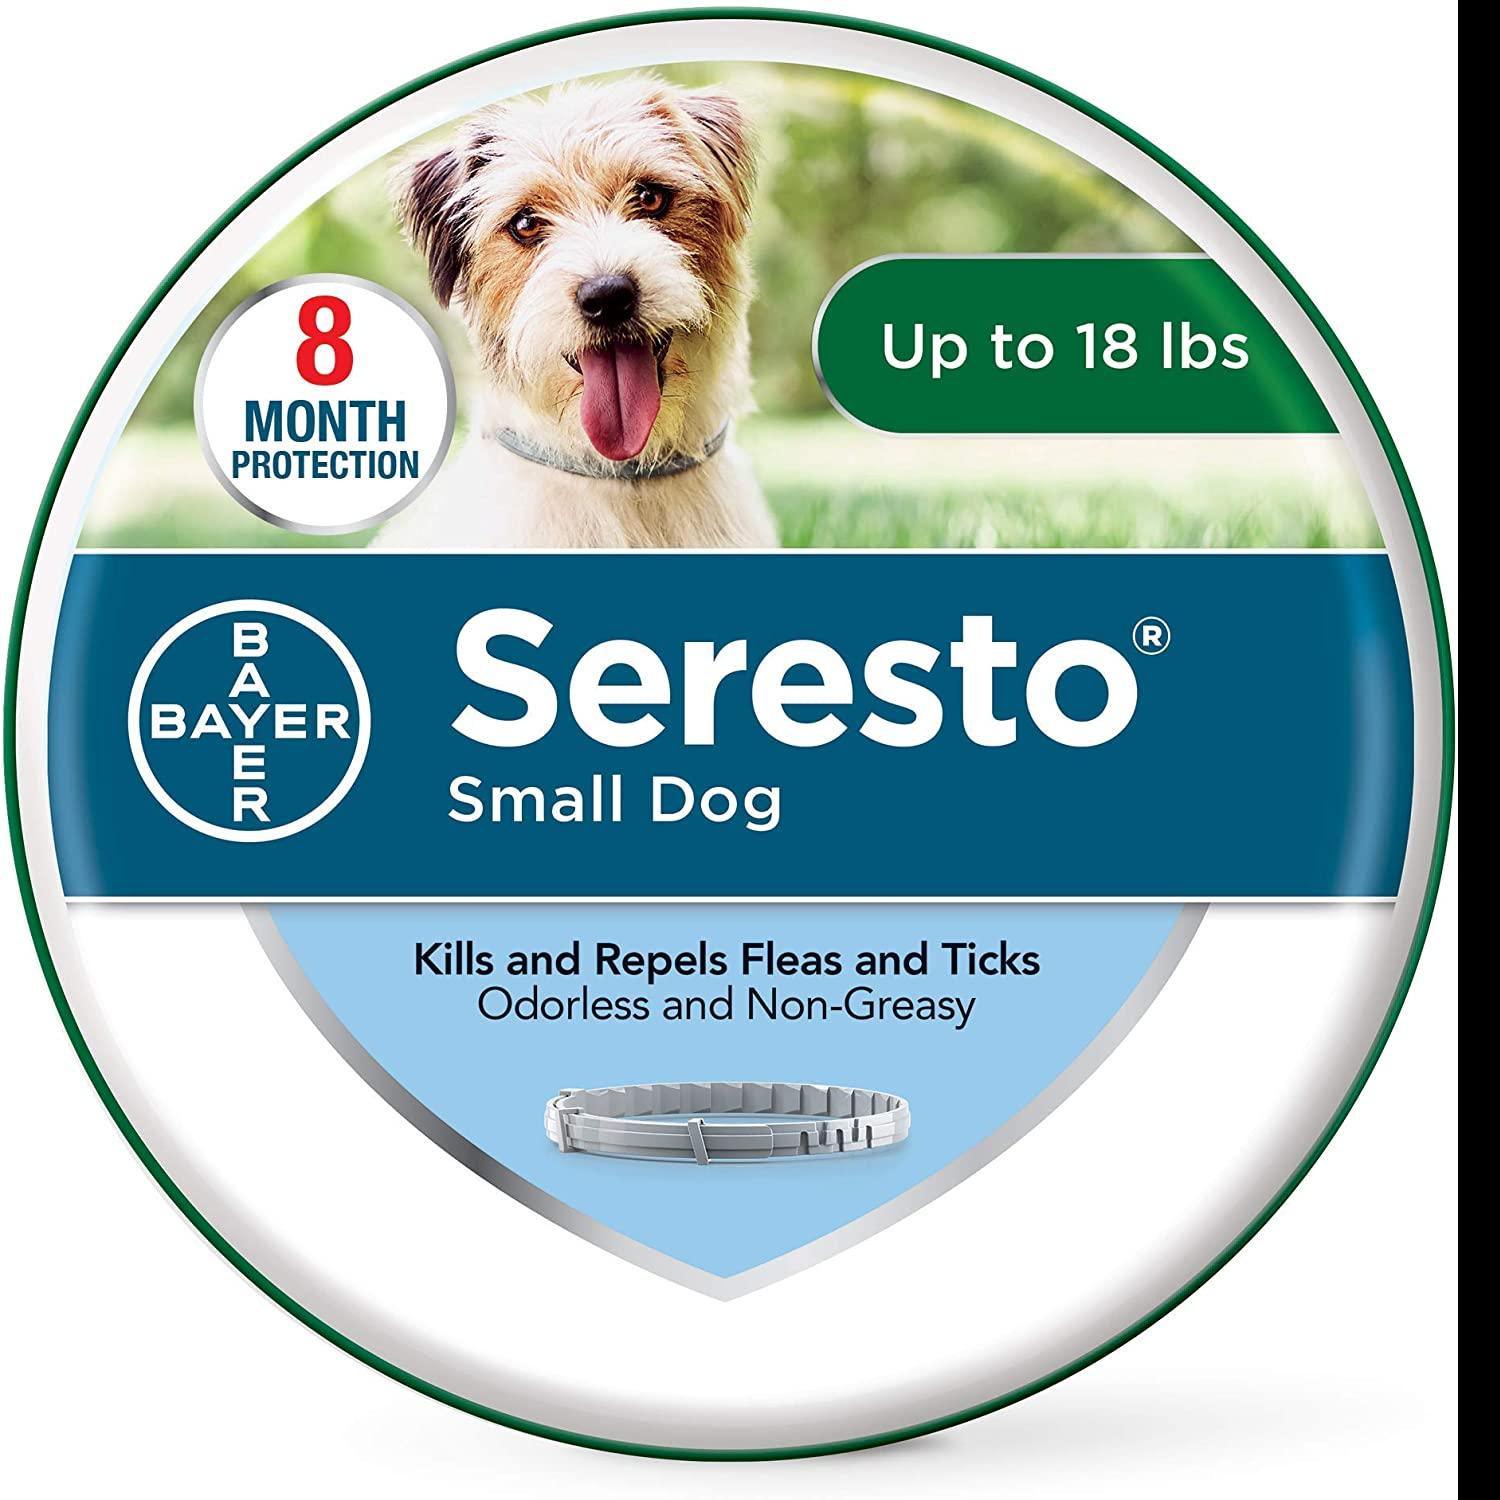 Seresto 8-Month Flea & Tick Prevention Dog Collar for $35.19 Shipped